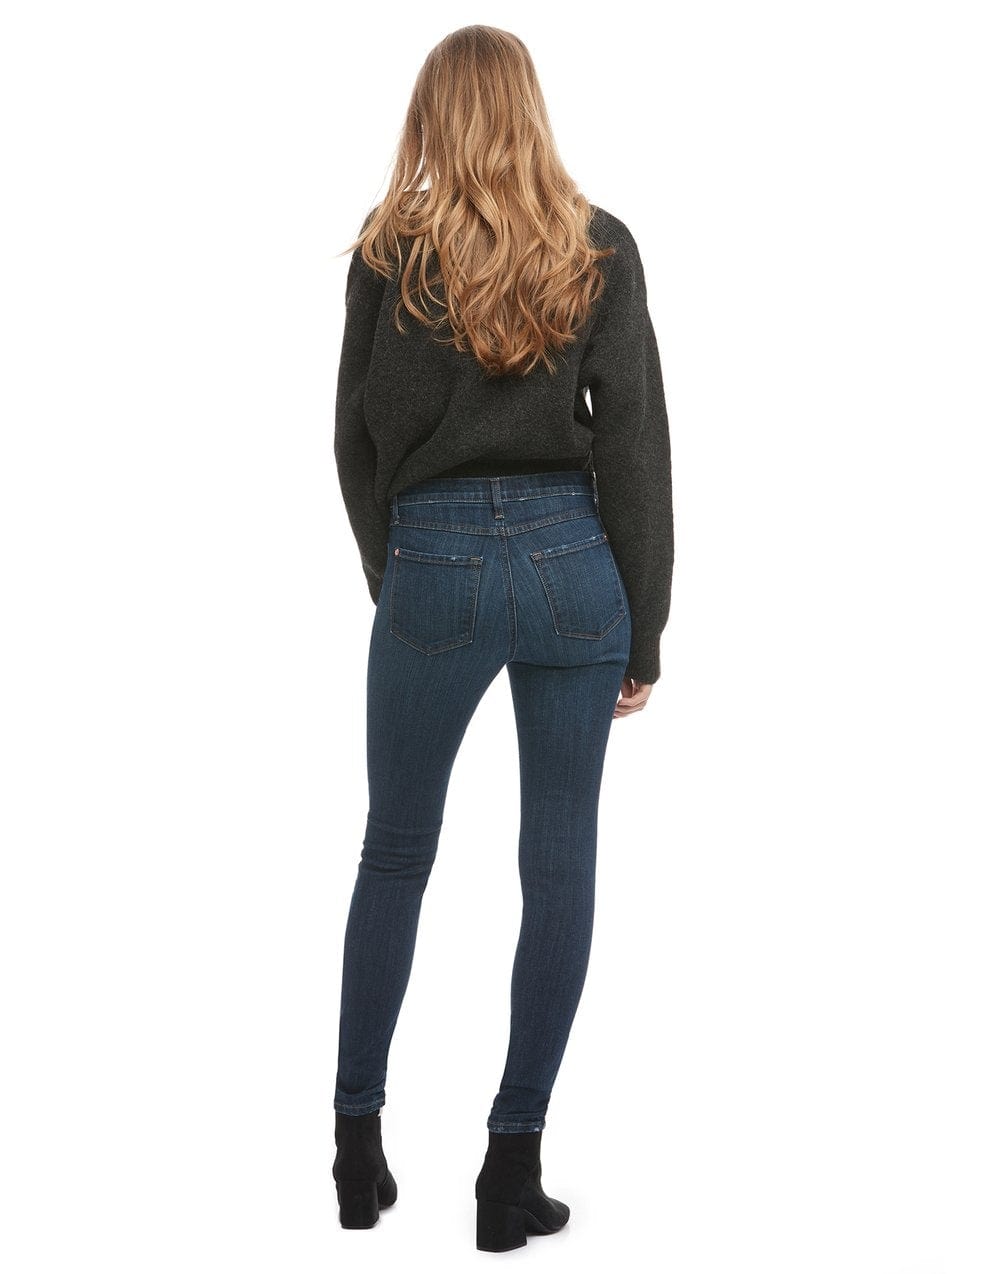 Yoga Jeans Rachel - Jean skinny taille classique - Montecristo